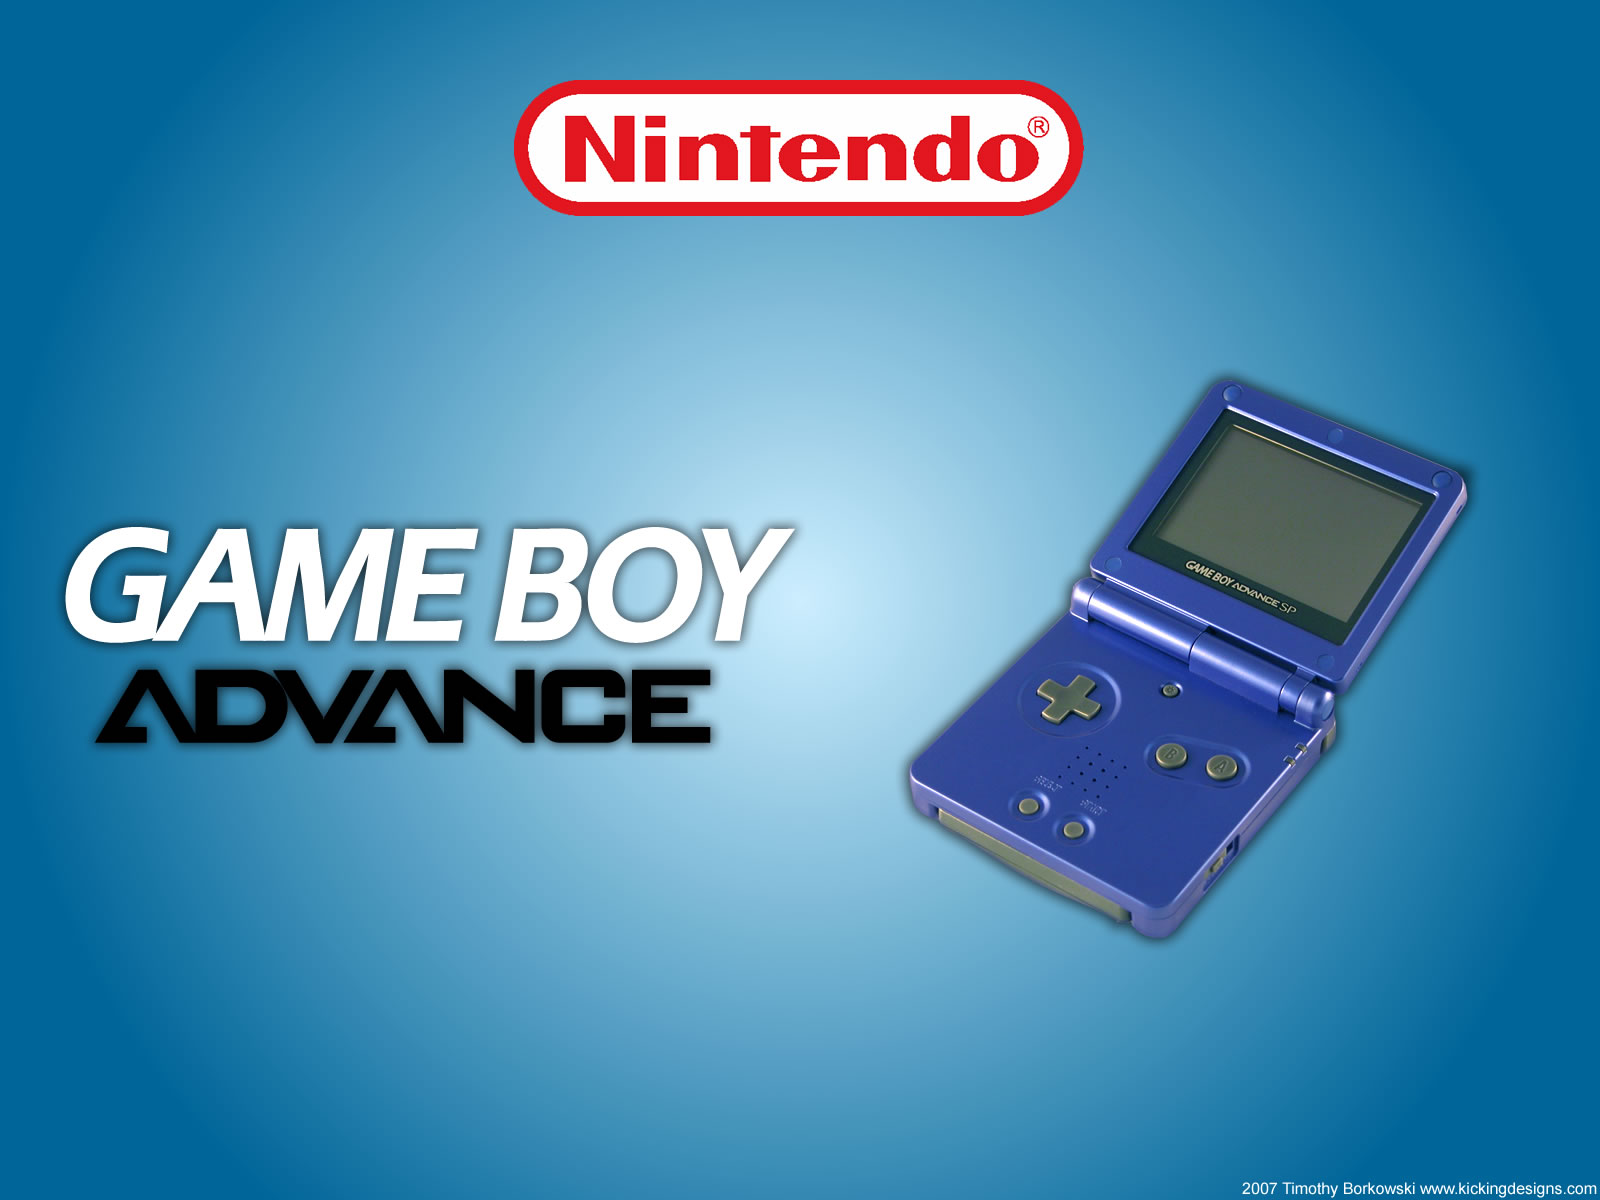 Mine game boy. Нинтендо геймбой Advance. Game boy Advance SP игры. Nintendo game boy Advance игры. Nintendo game boy Advance SP.